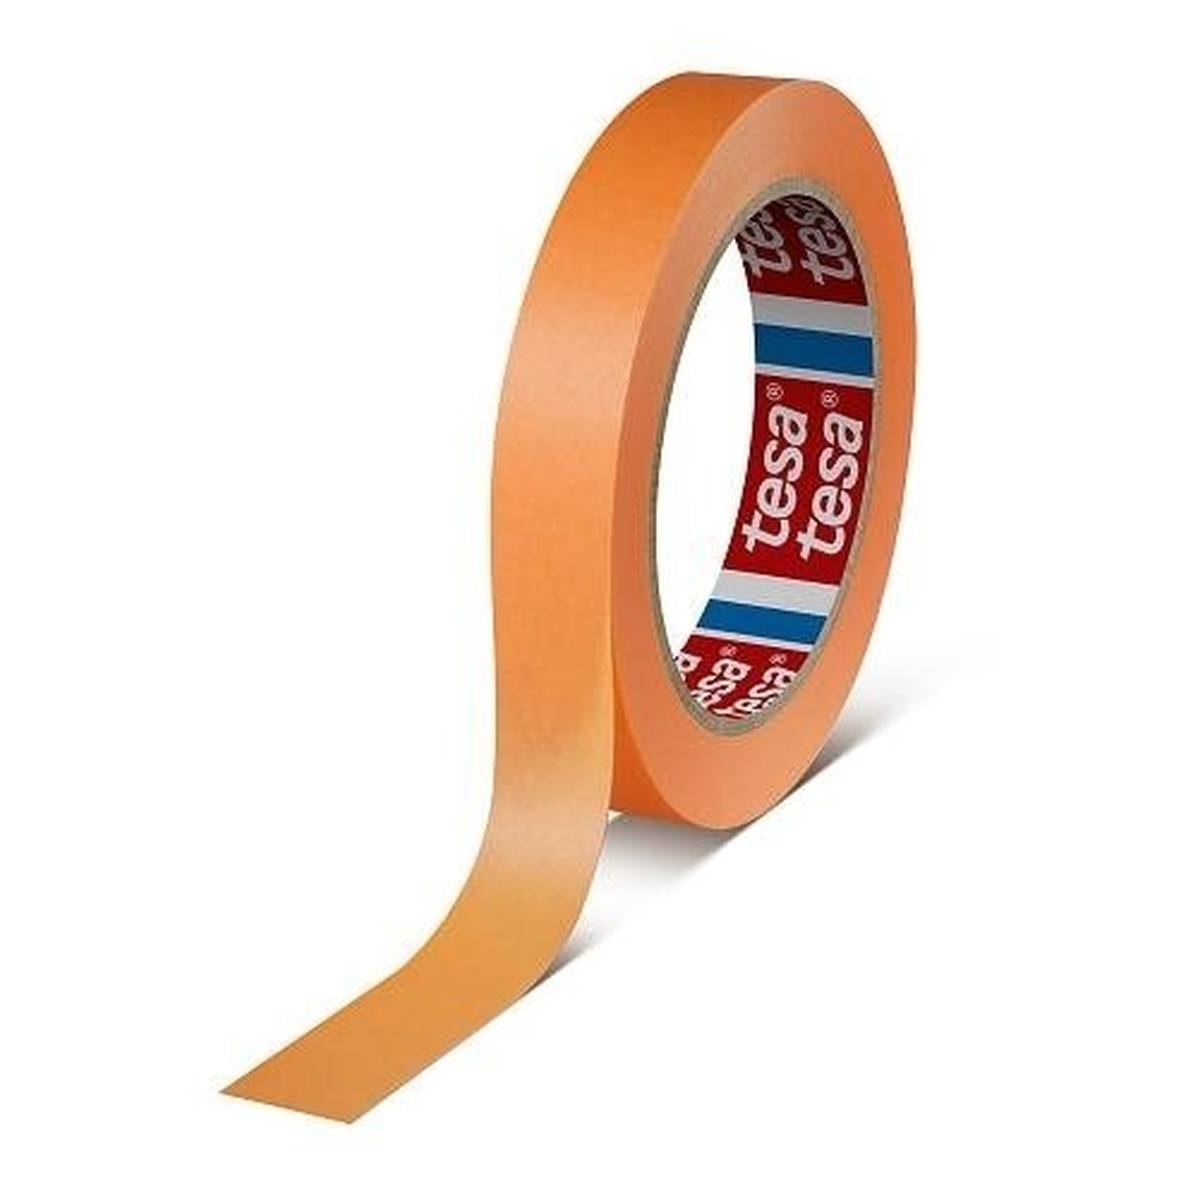 Tesakrepp 4342 Washi tape crepé de precisión 25mmx50m naranja